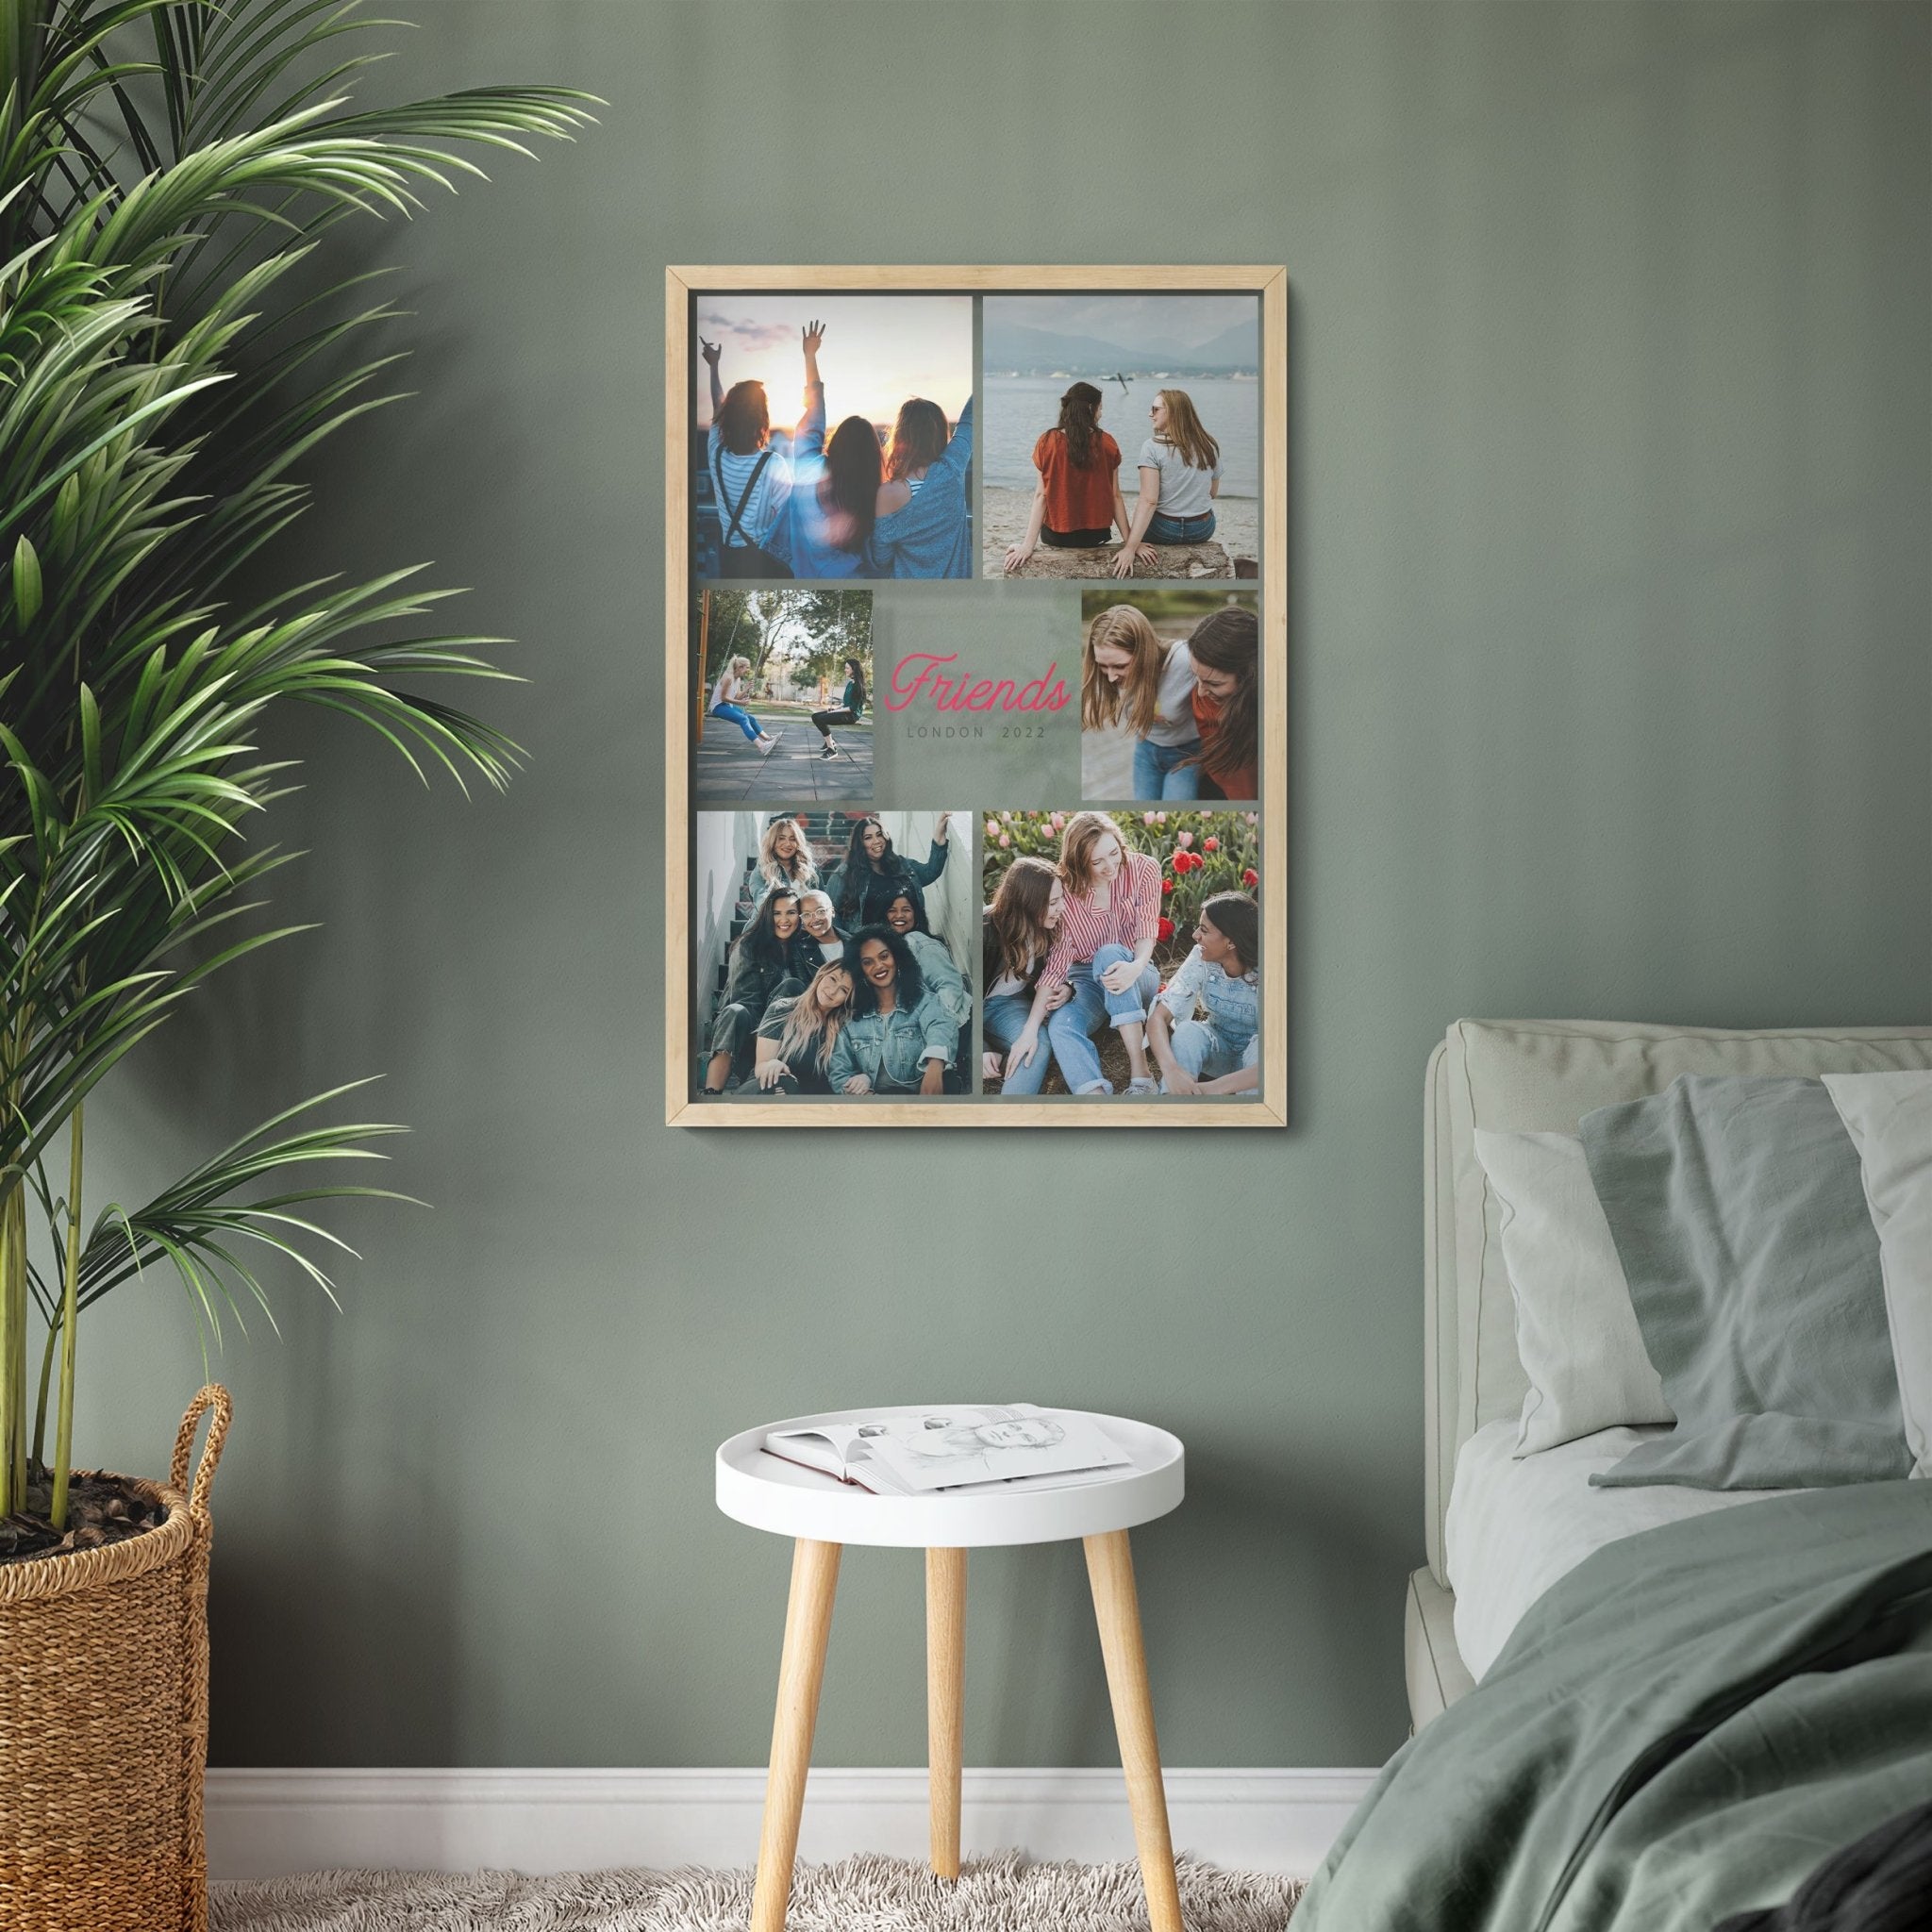 Best Friend Collage Frame | Multi Picture Frame For Friends Birthday Transparent Frame - UniquePrintsStore